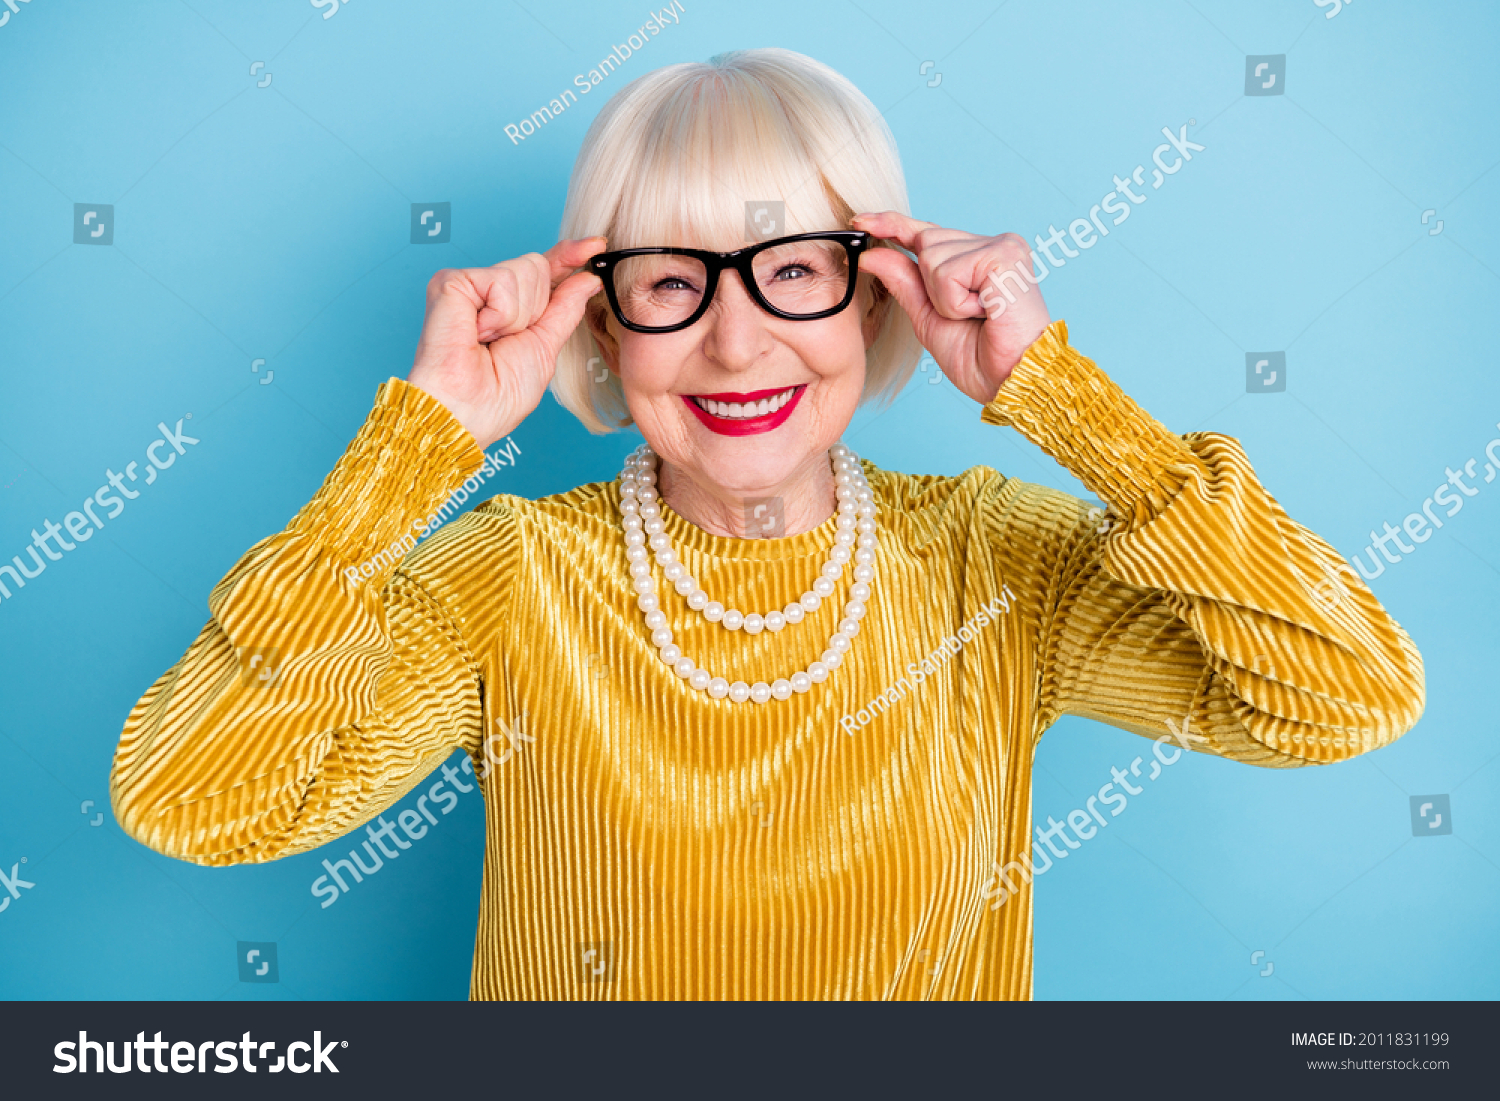 Photo of cheerful short hairdo senior lady hands eyewear wear blouse necklace isolated on blue color background #2011831199